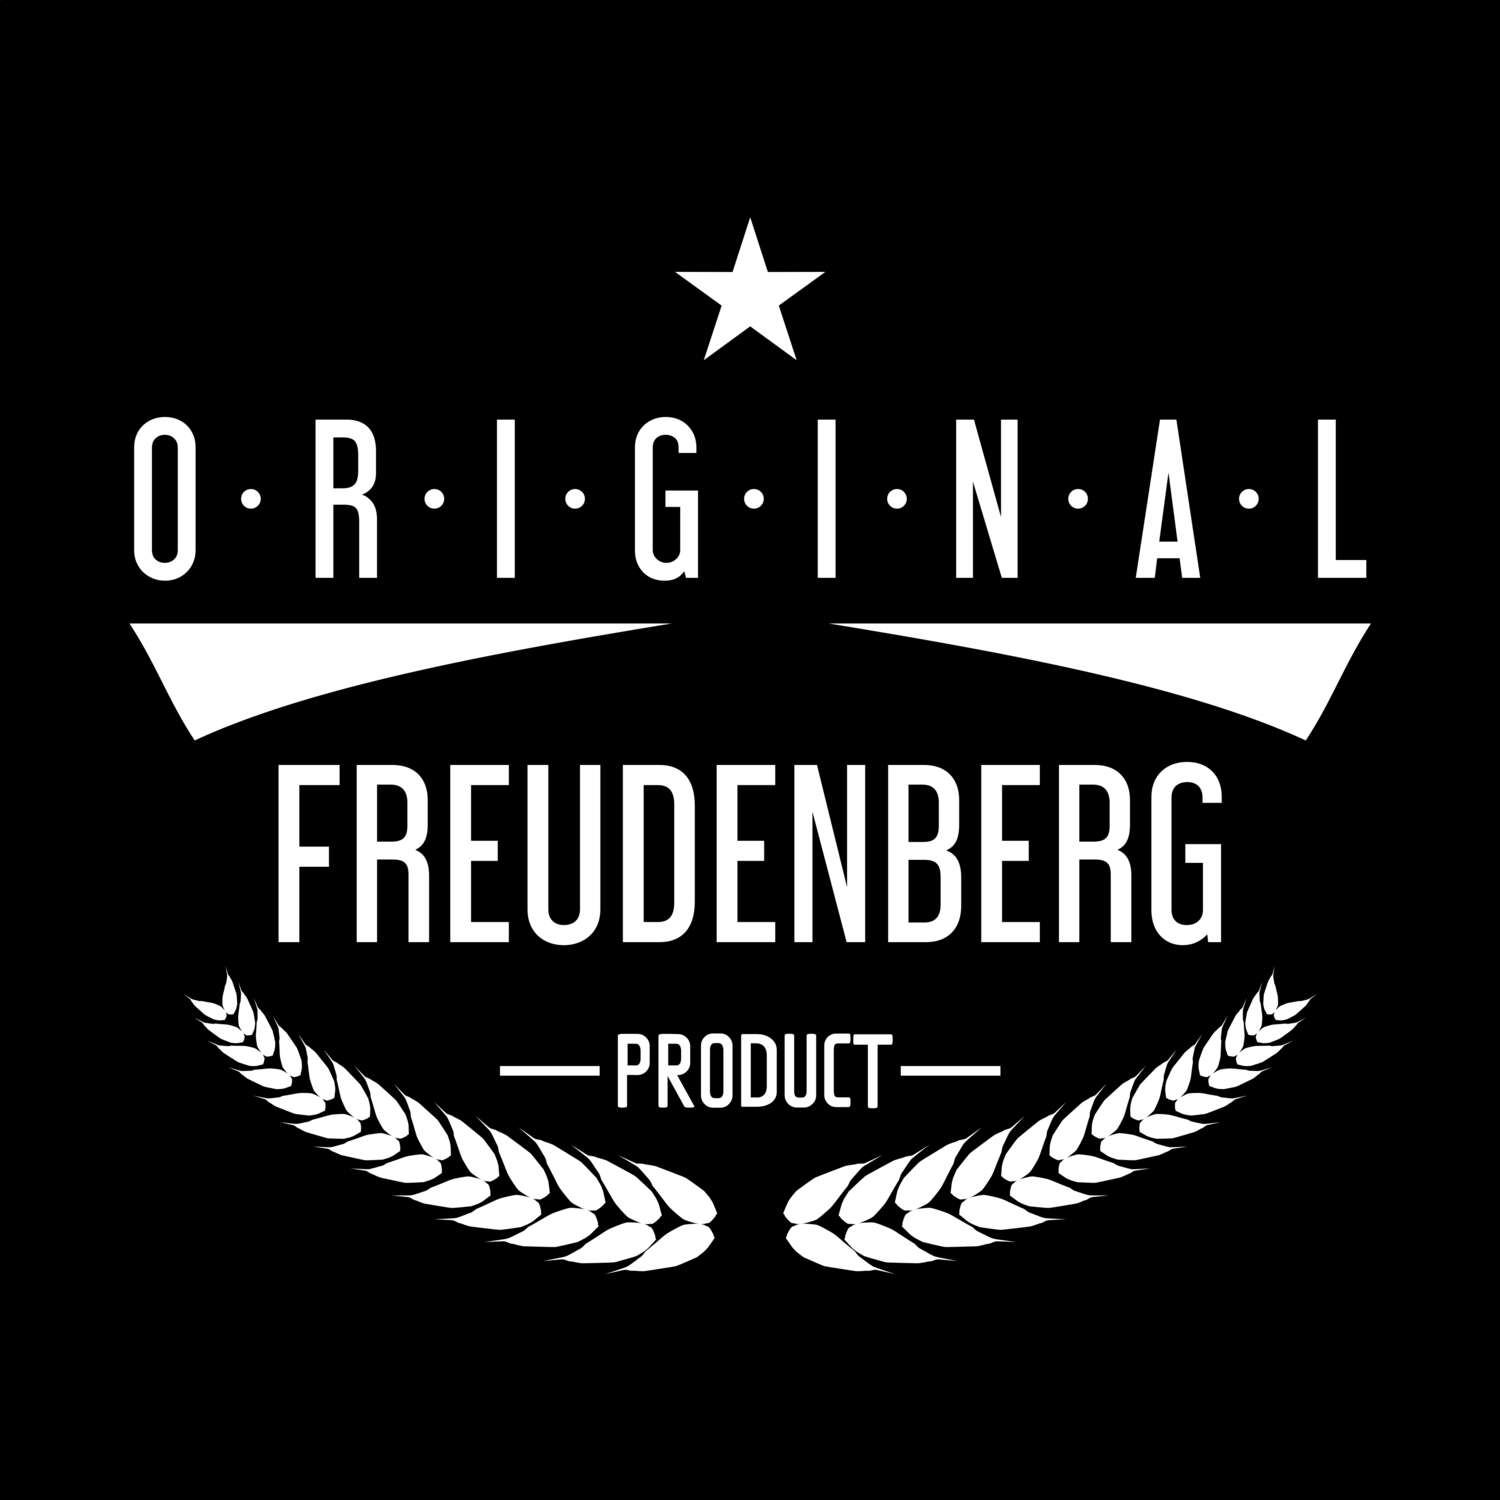 Freudenberg T-Shirt »Original Product«